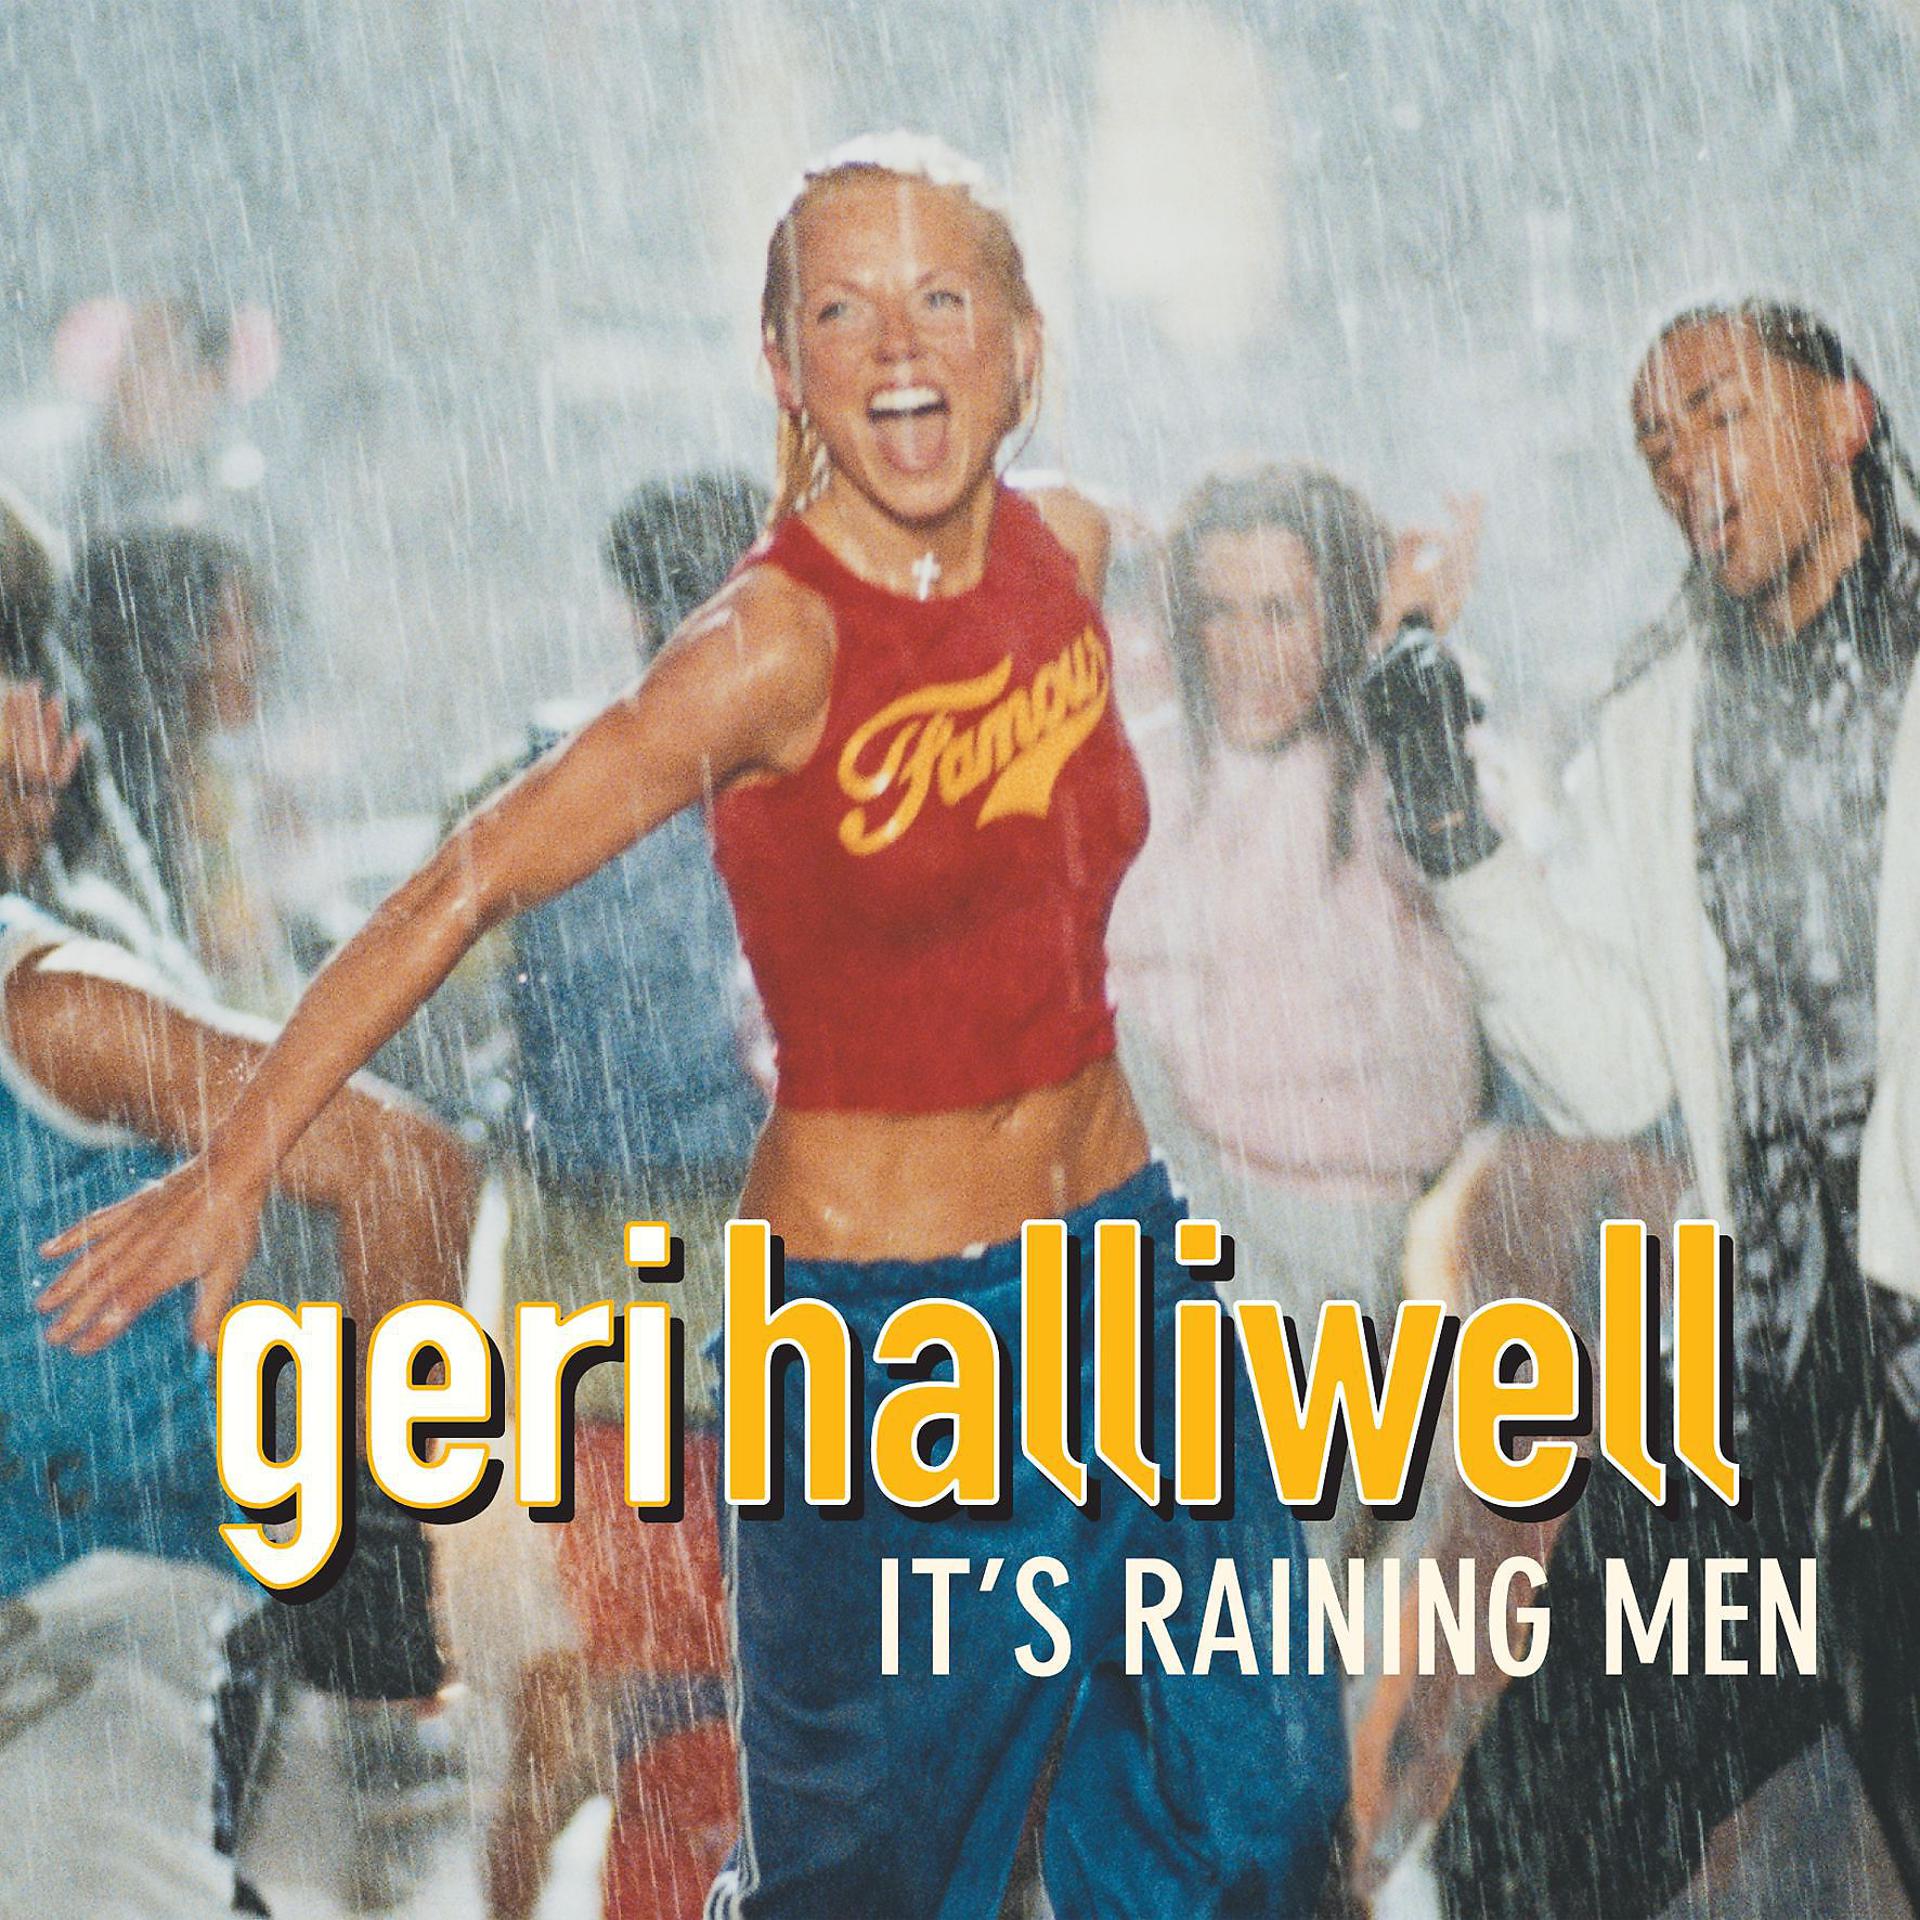 Geri halliwell it s raining